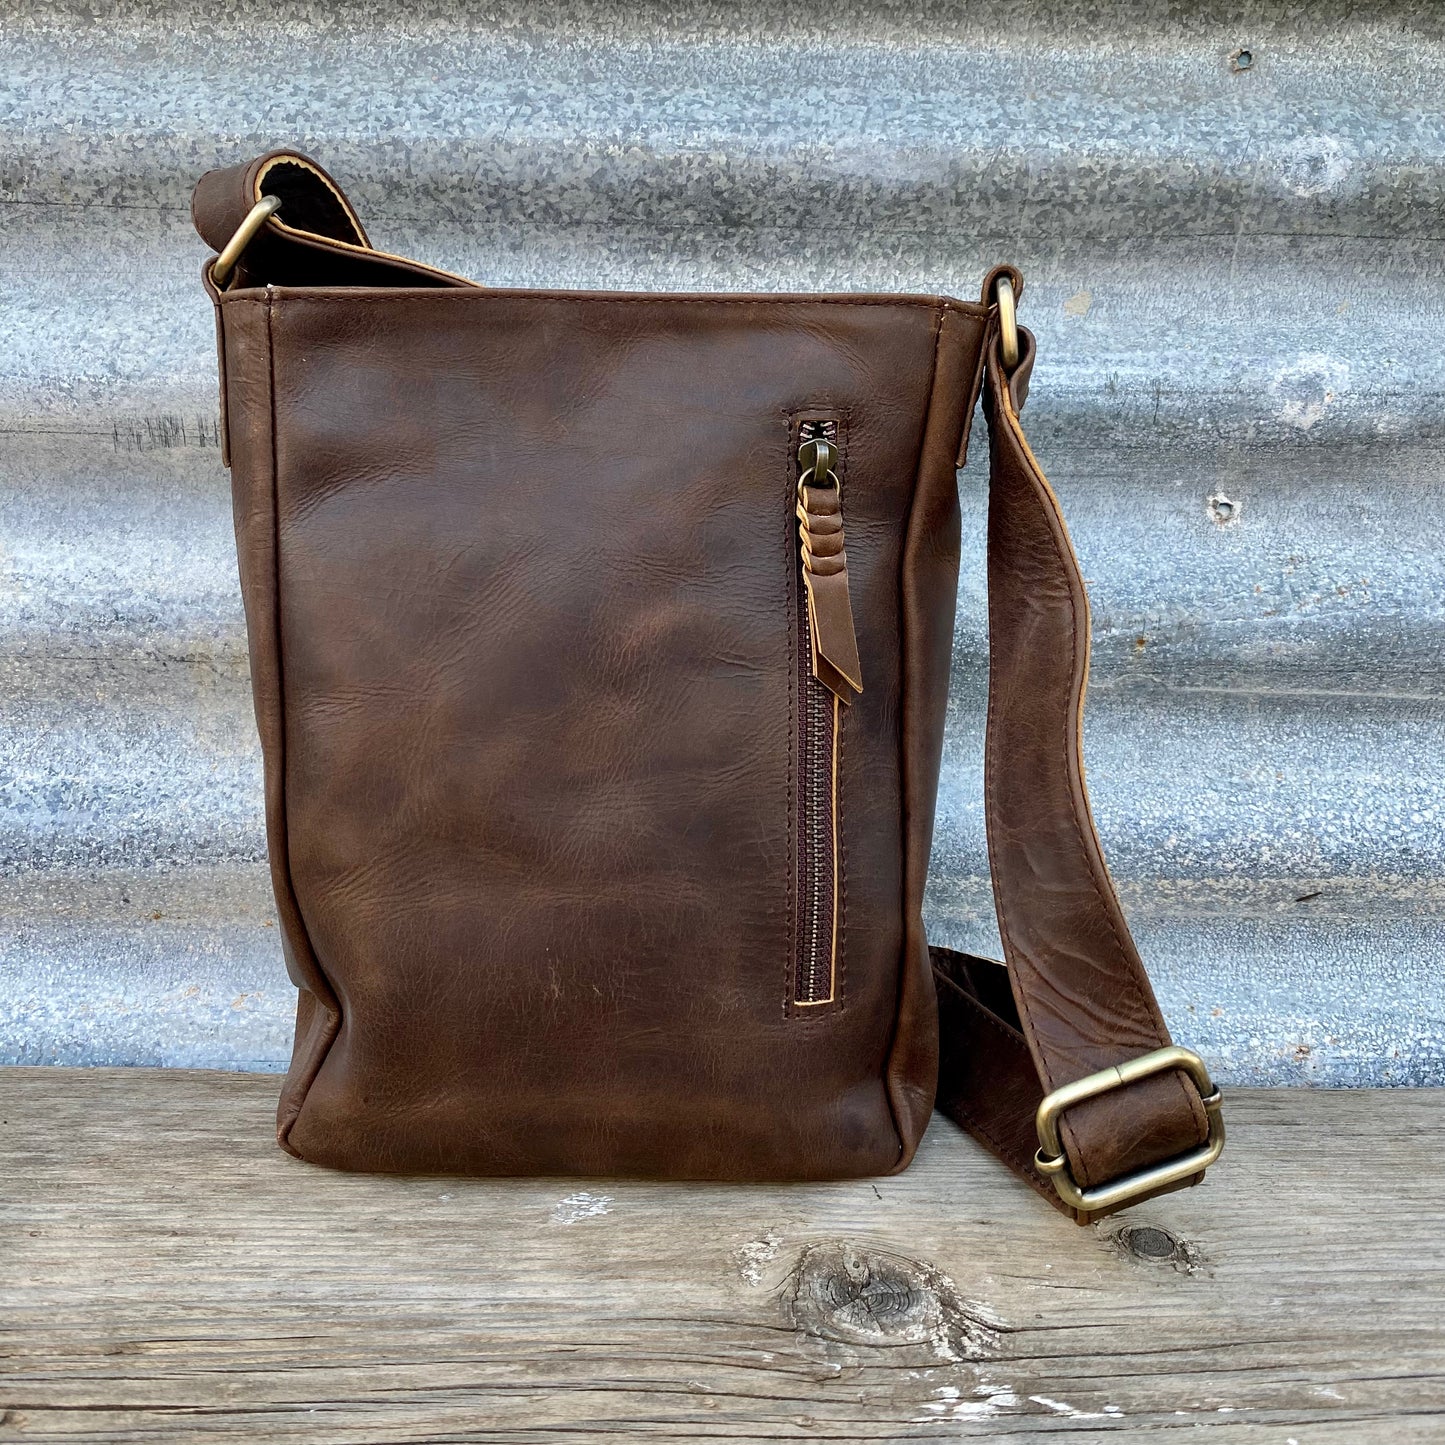 A Lean Pocket Bag